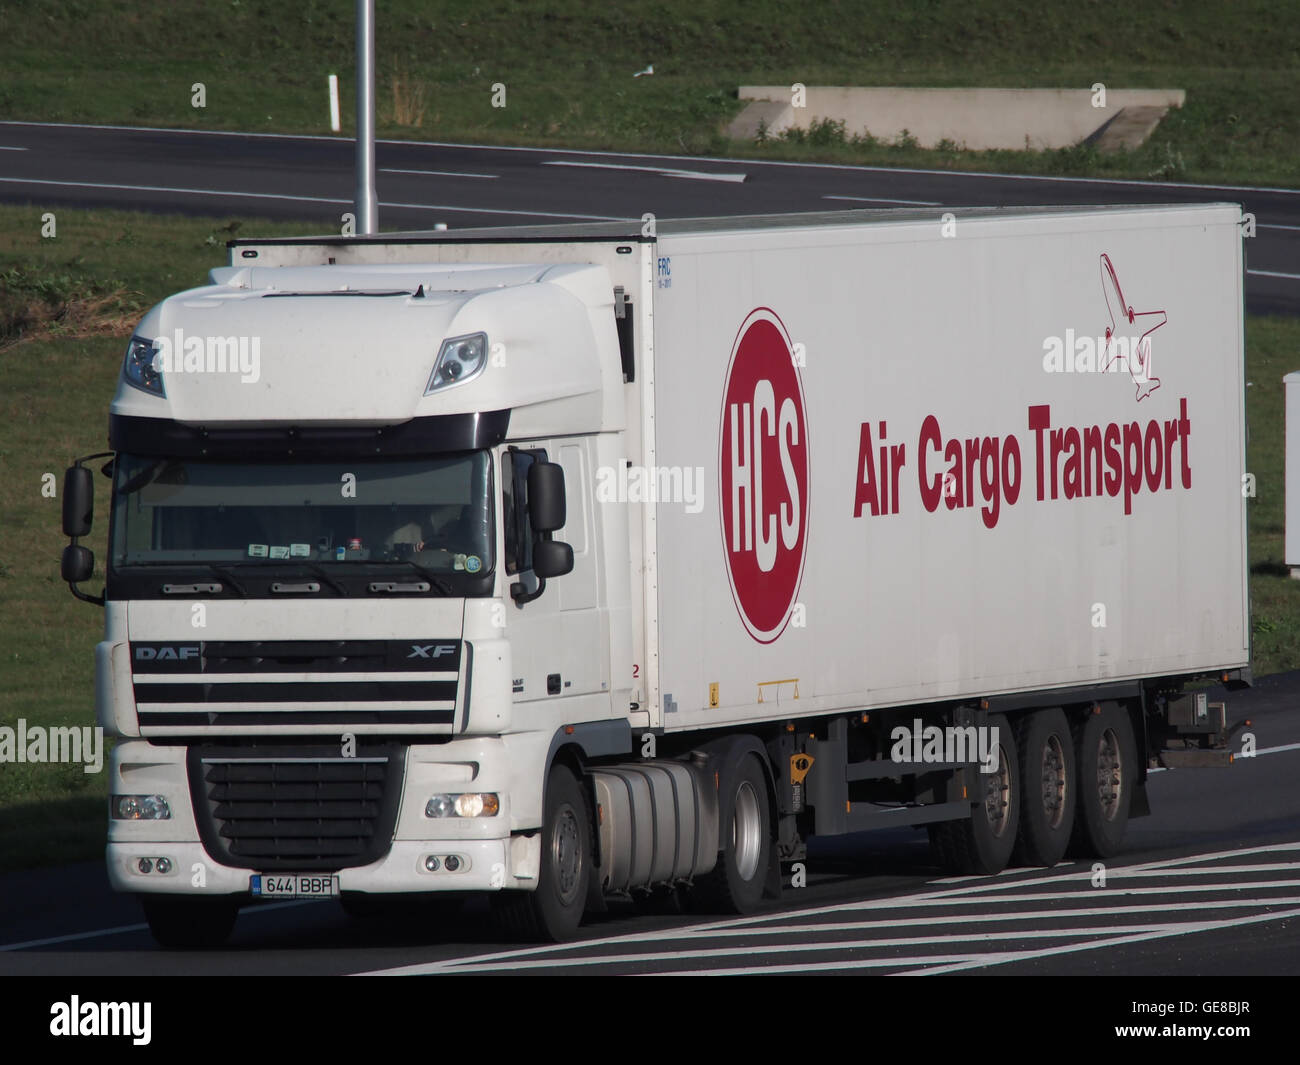 DAF XF, HCS Air Cargo Tarnsport, pic1 Stock Photo